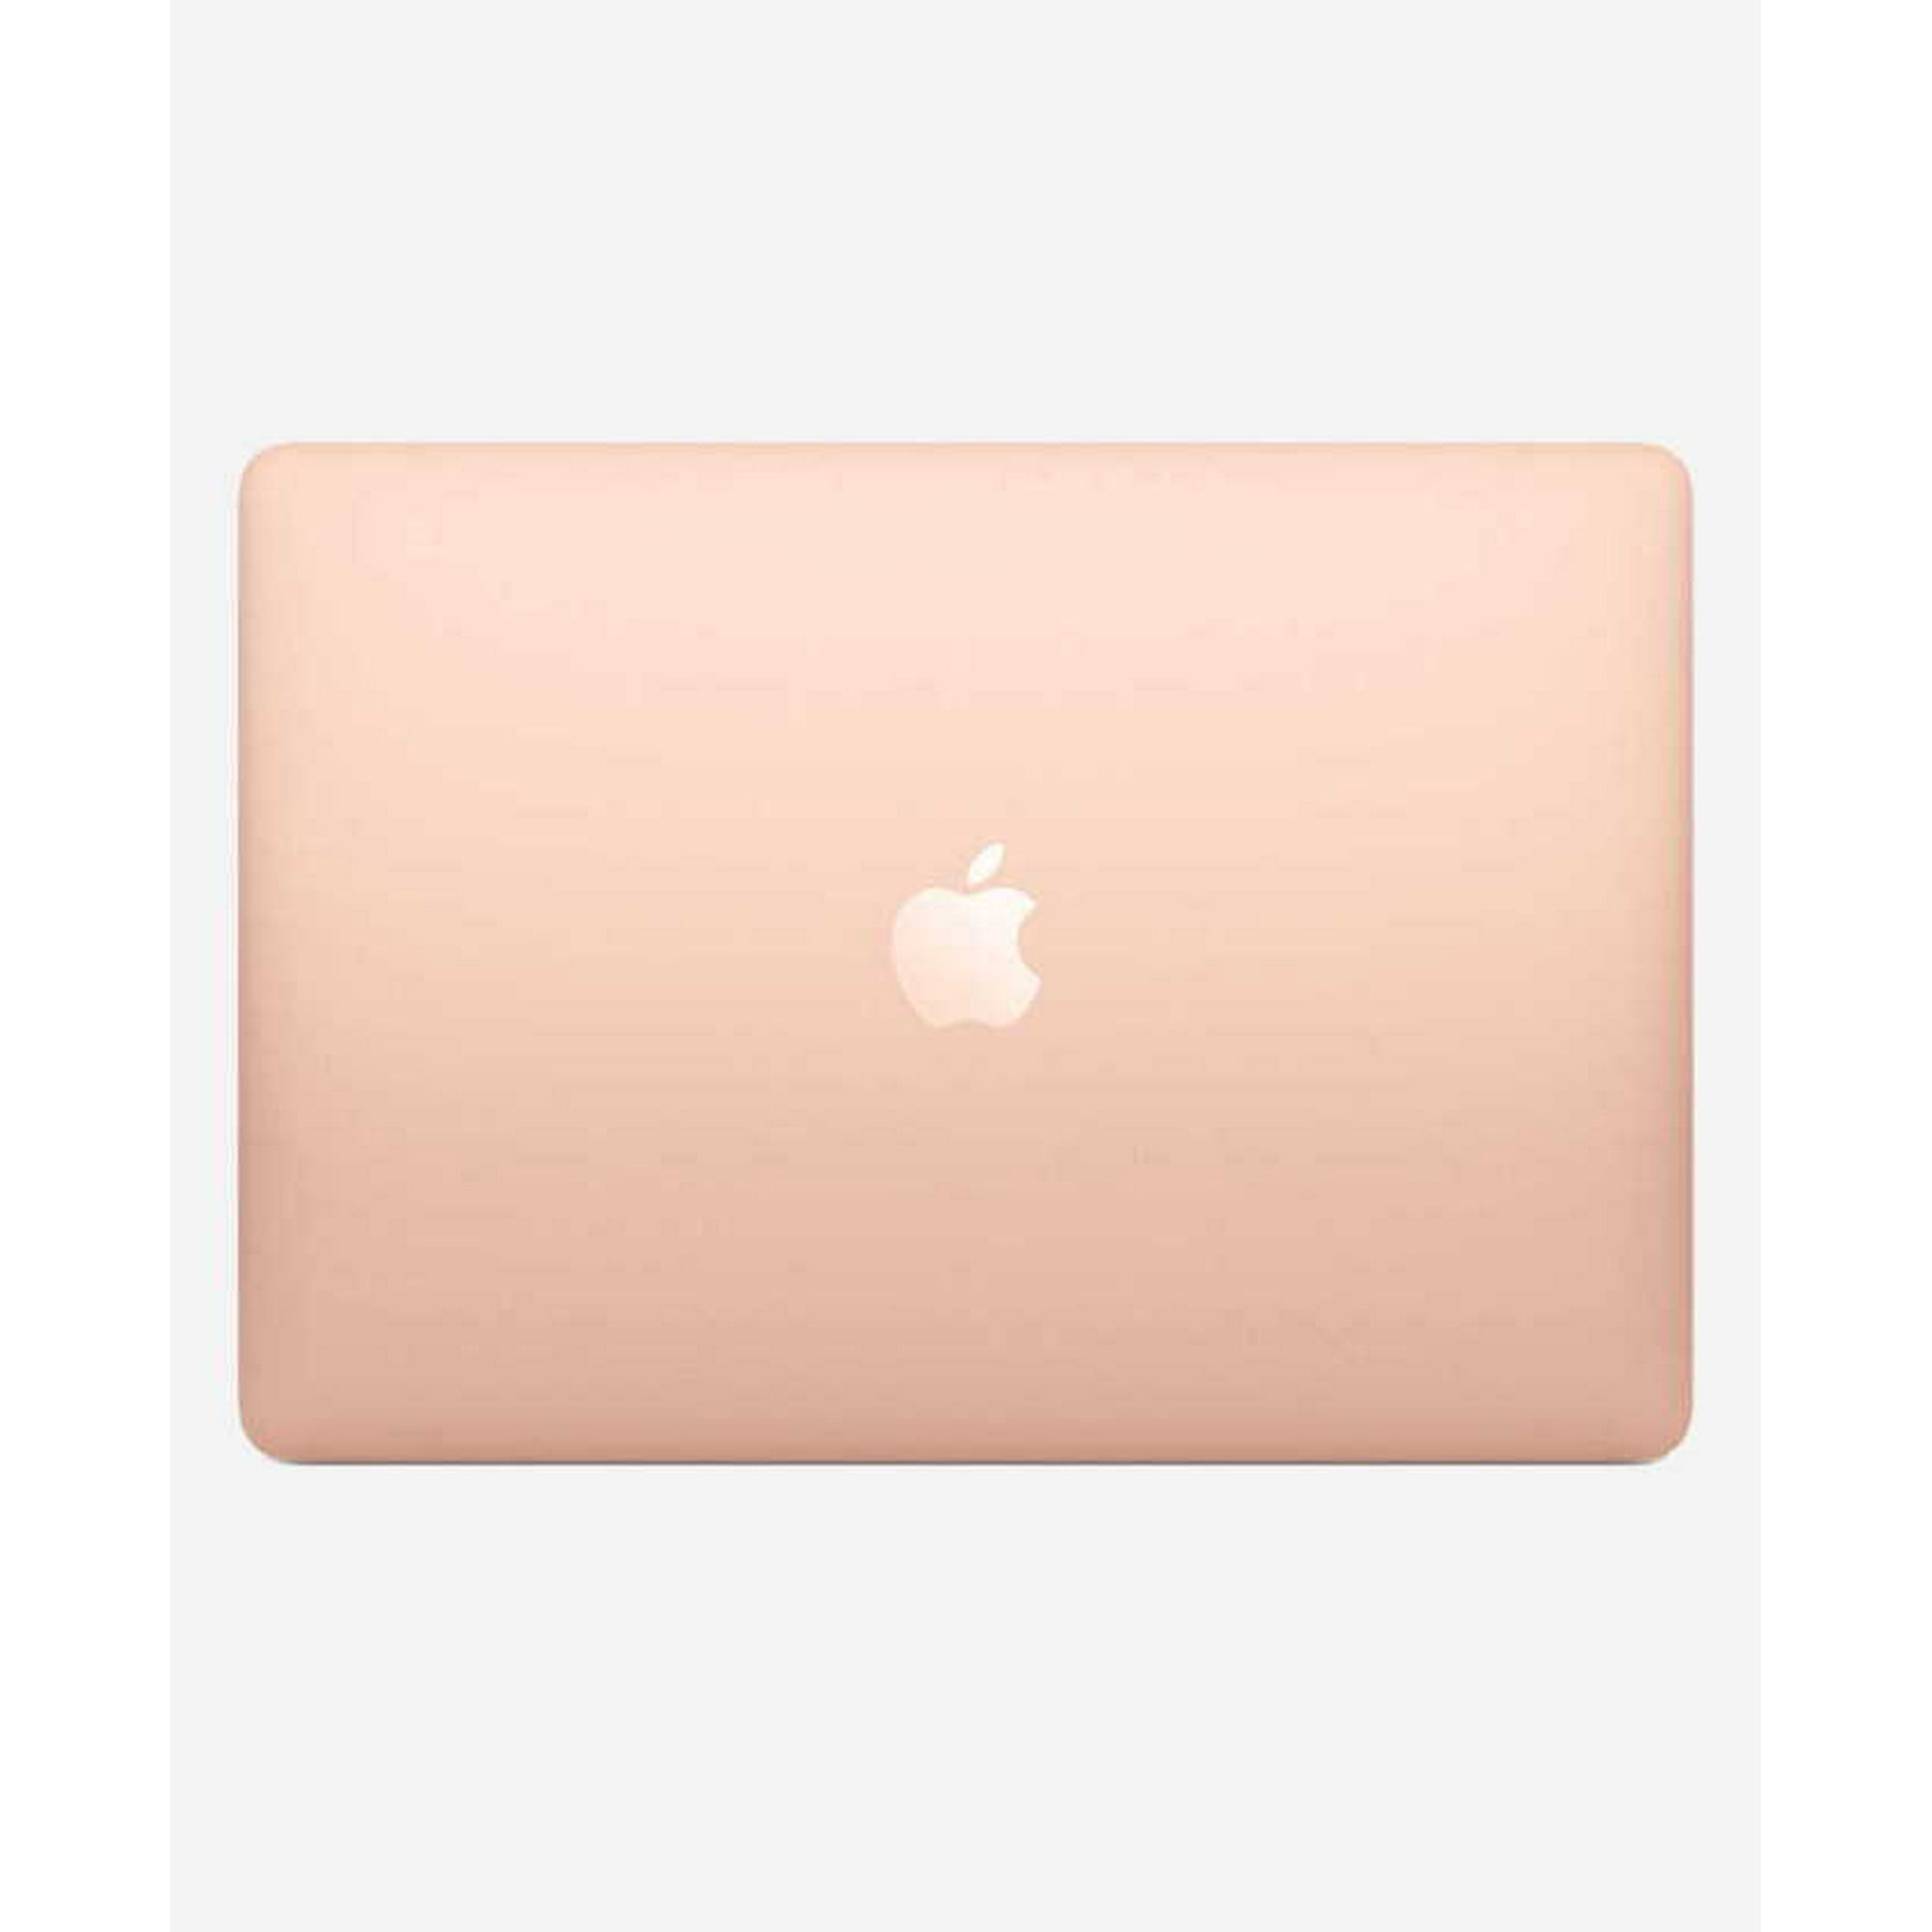 Apple Macbook Air 13.3-inch (Retina, Gold) 1.2GHZ Quad Core i7 